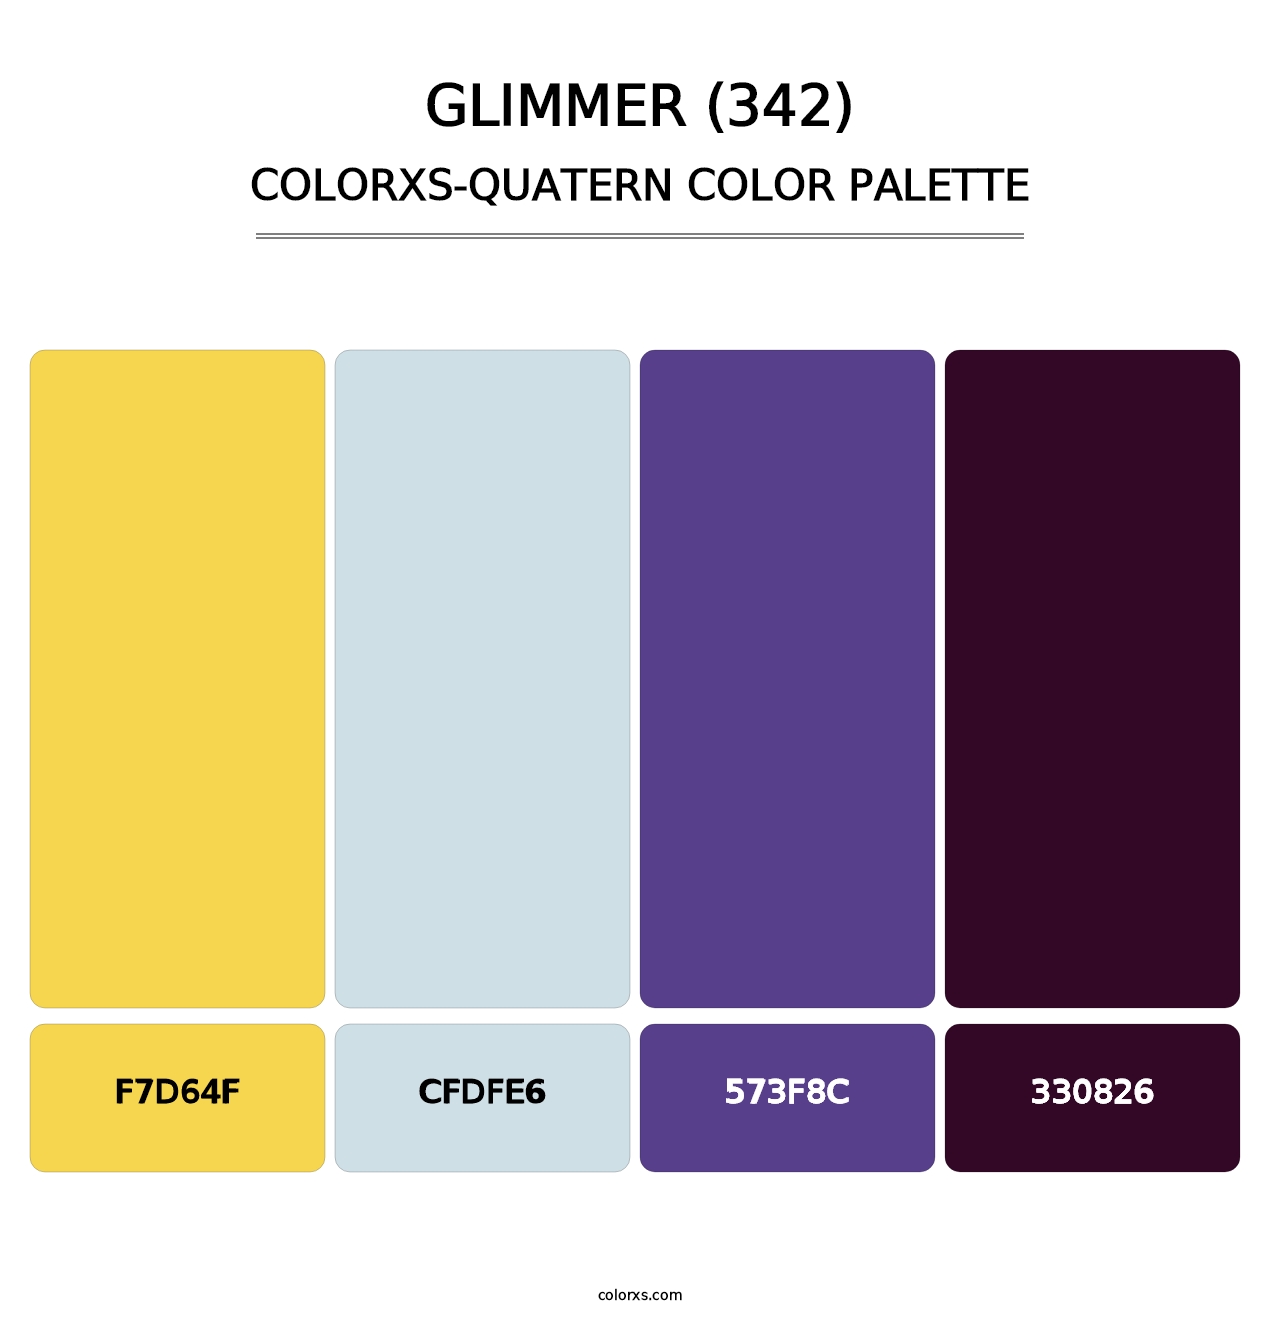 Glimmer (342) - Colorxs Quatern Palette